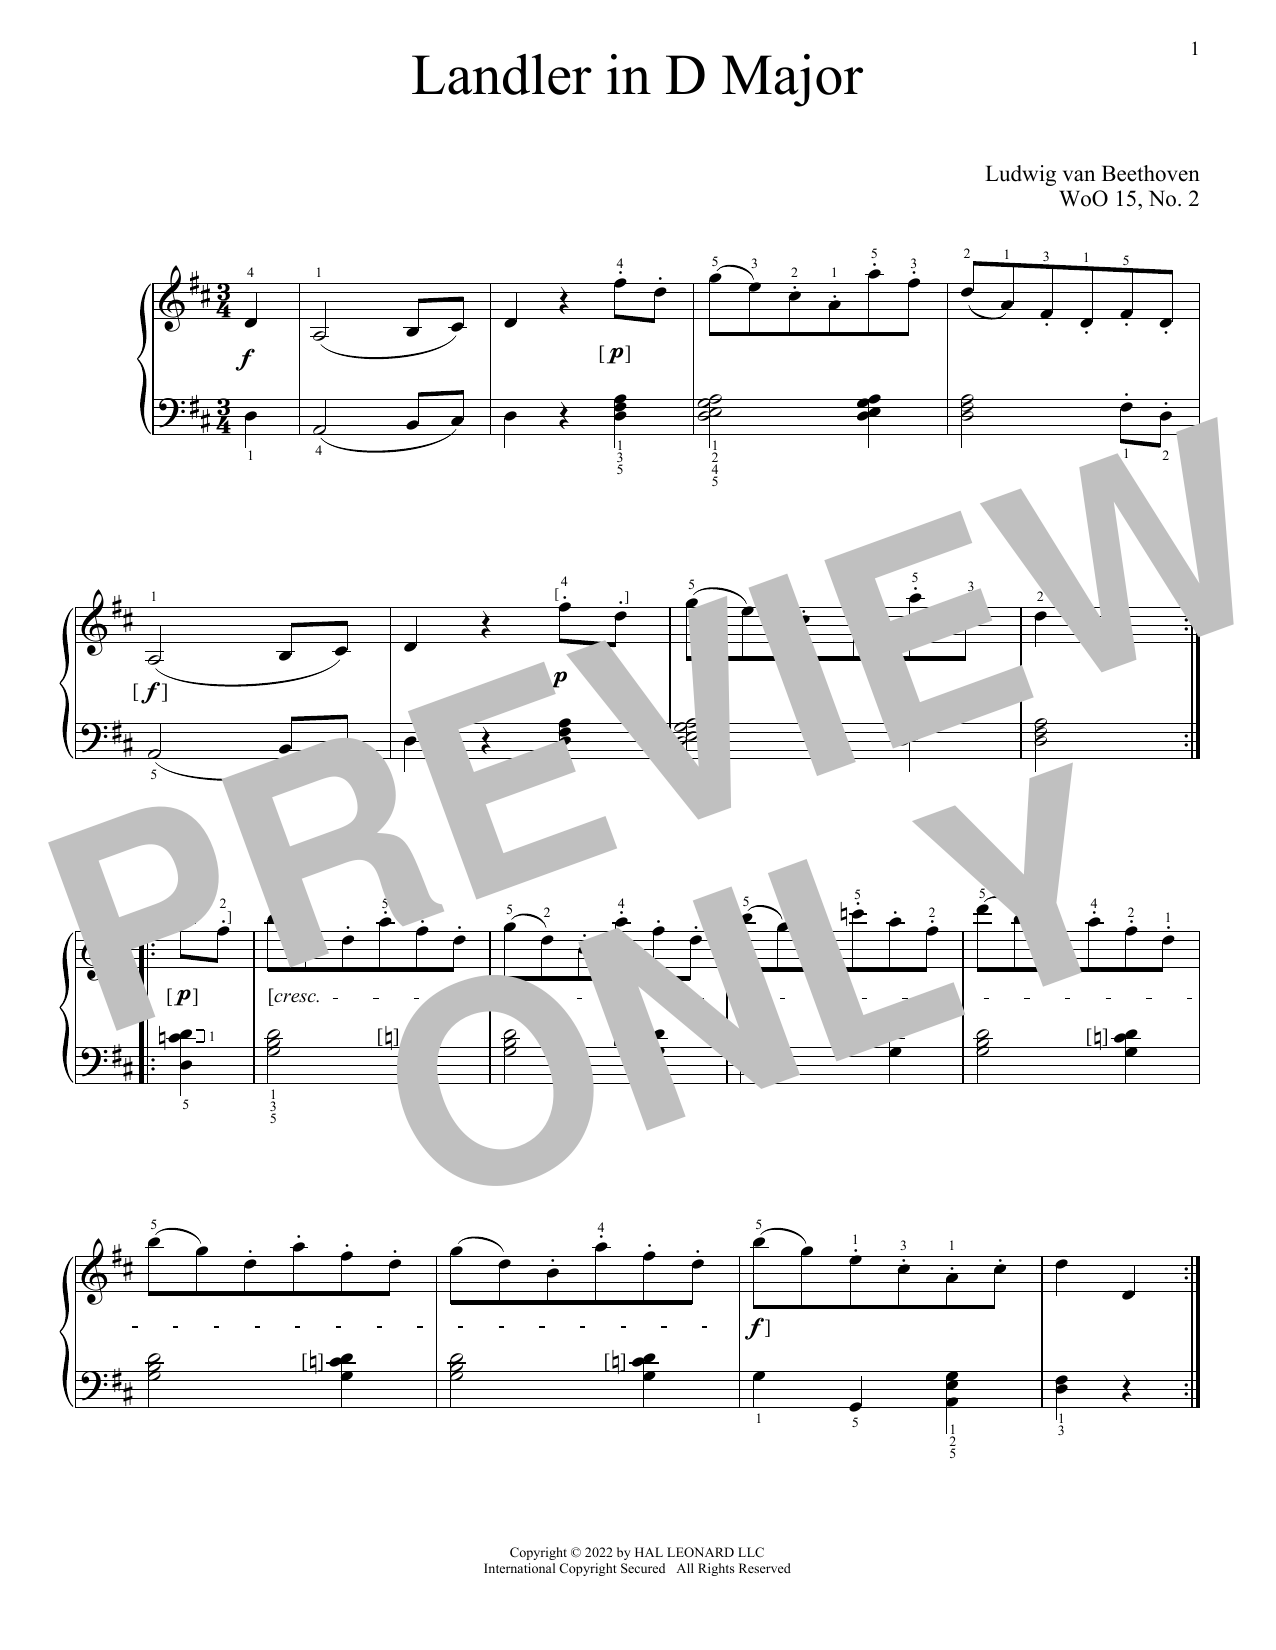 Download Ludwig van Beethoven Landler In D Major, WoO 15, No. 2 Sheet Music